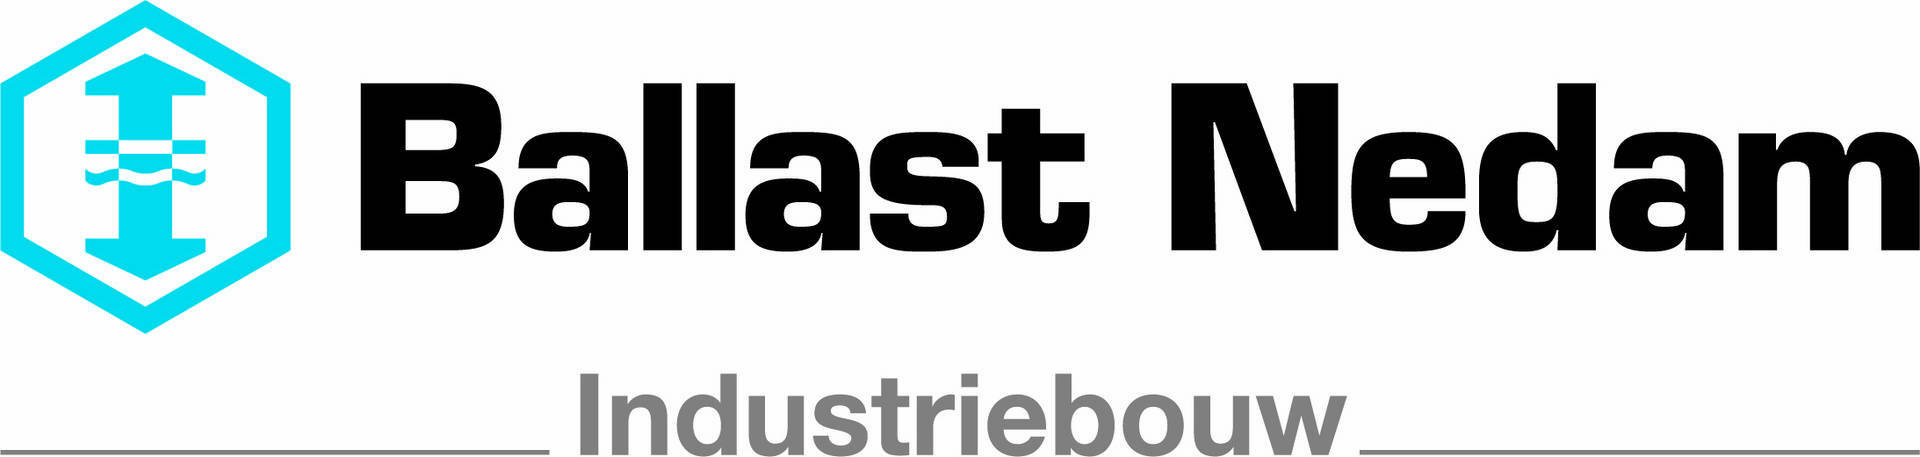 Ballast Nedam Industriebouw - logo